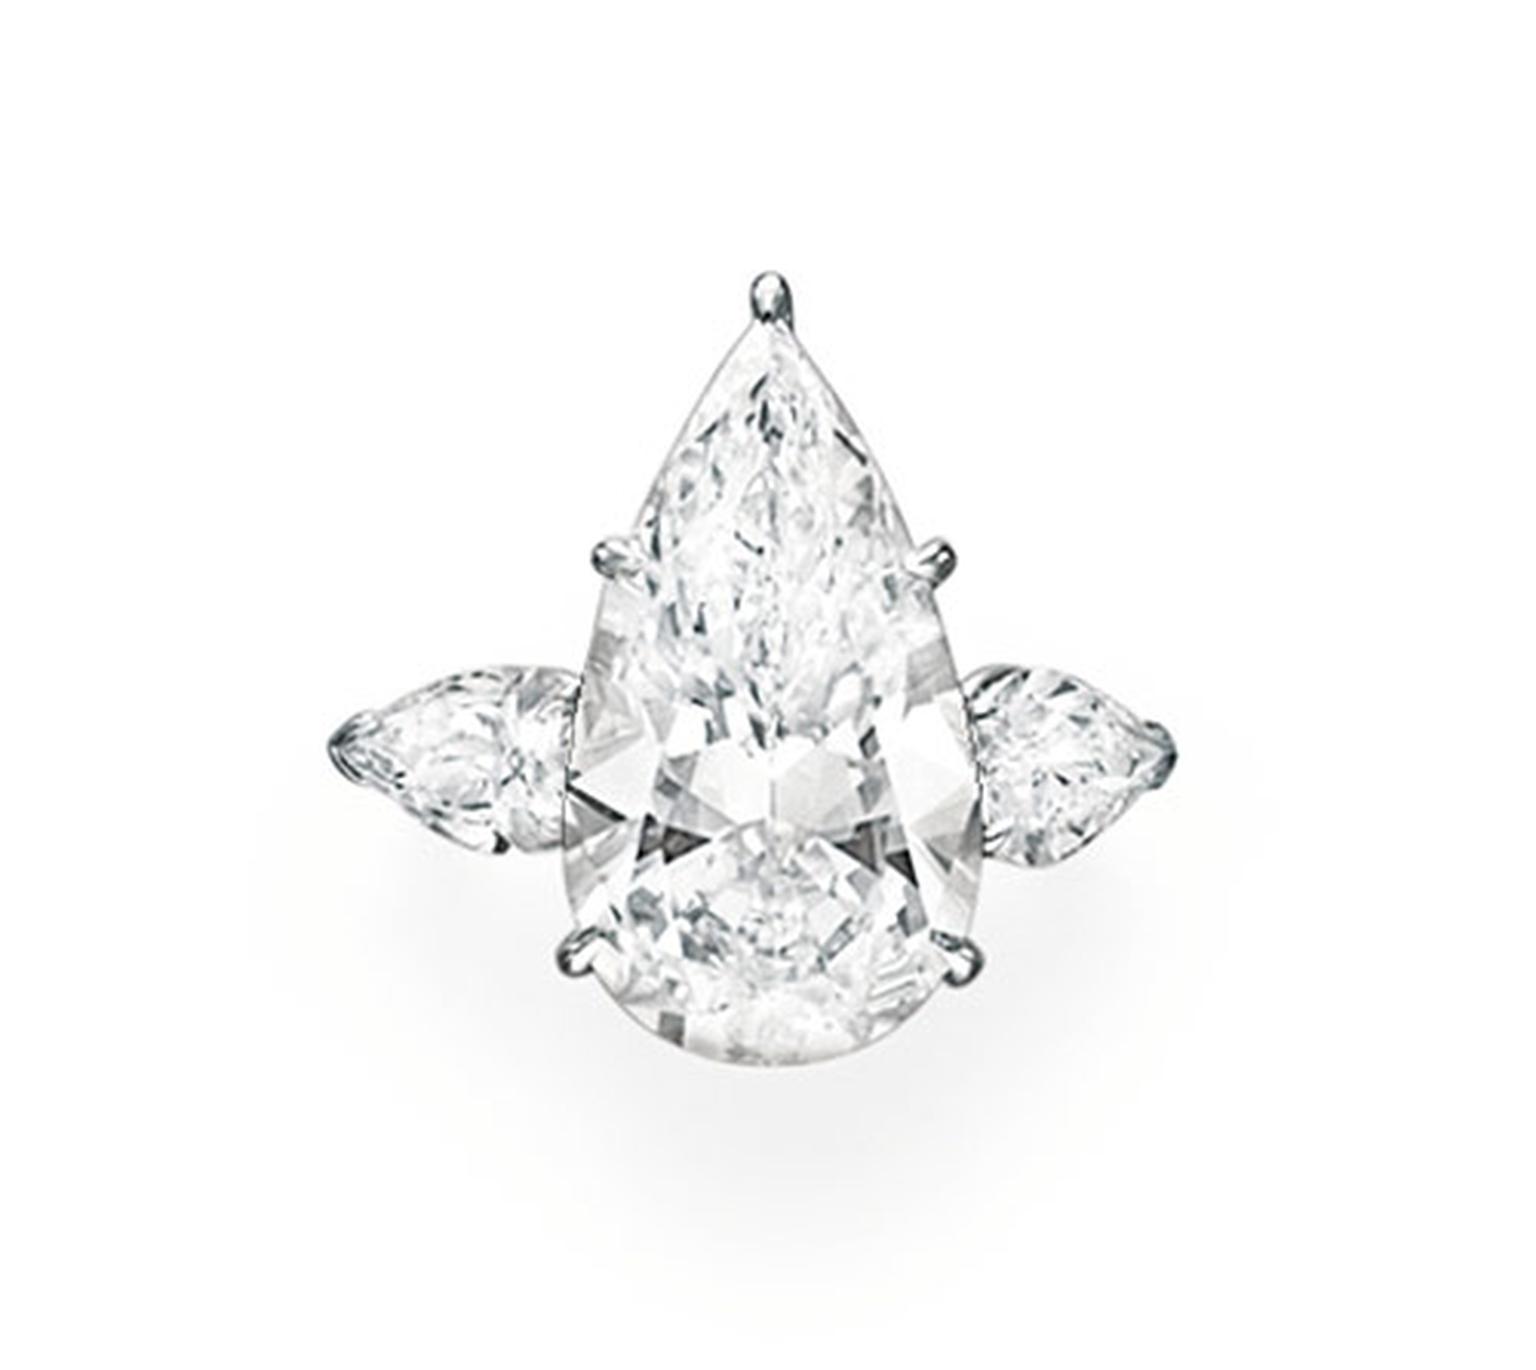 Christies-Pear-Shaped-Diamond-Ring